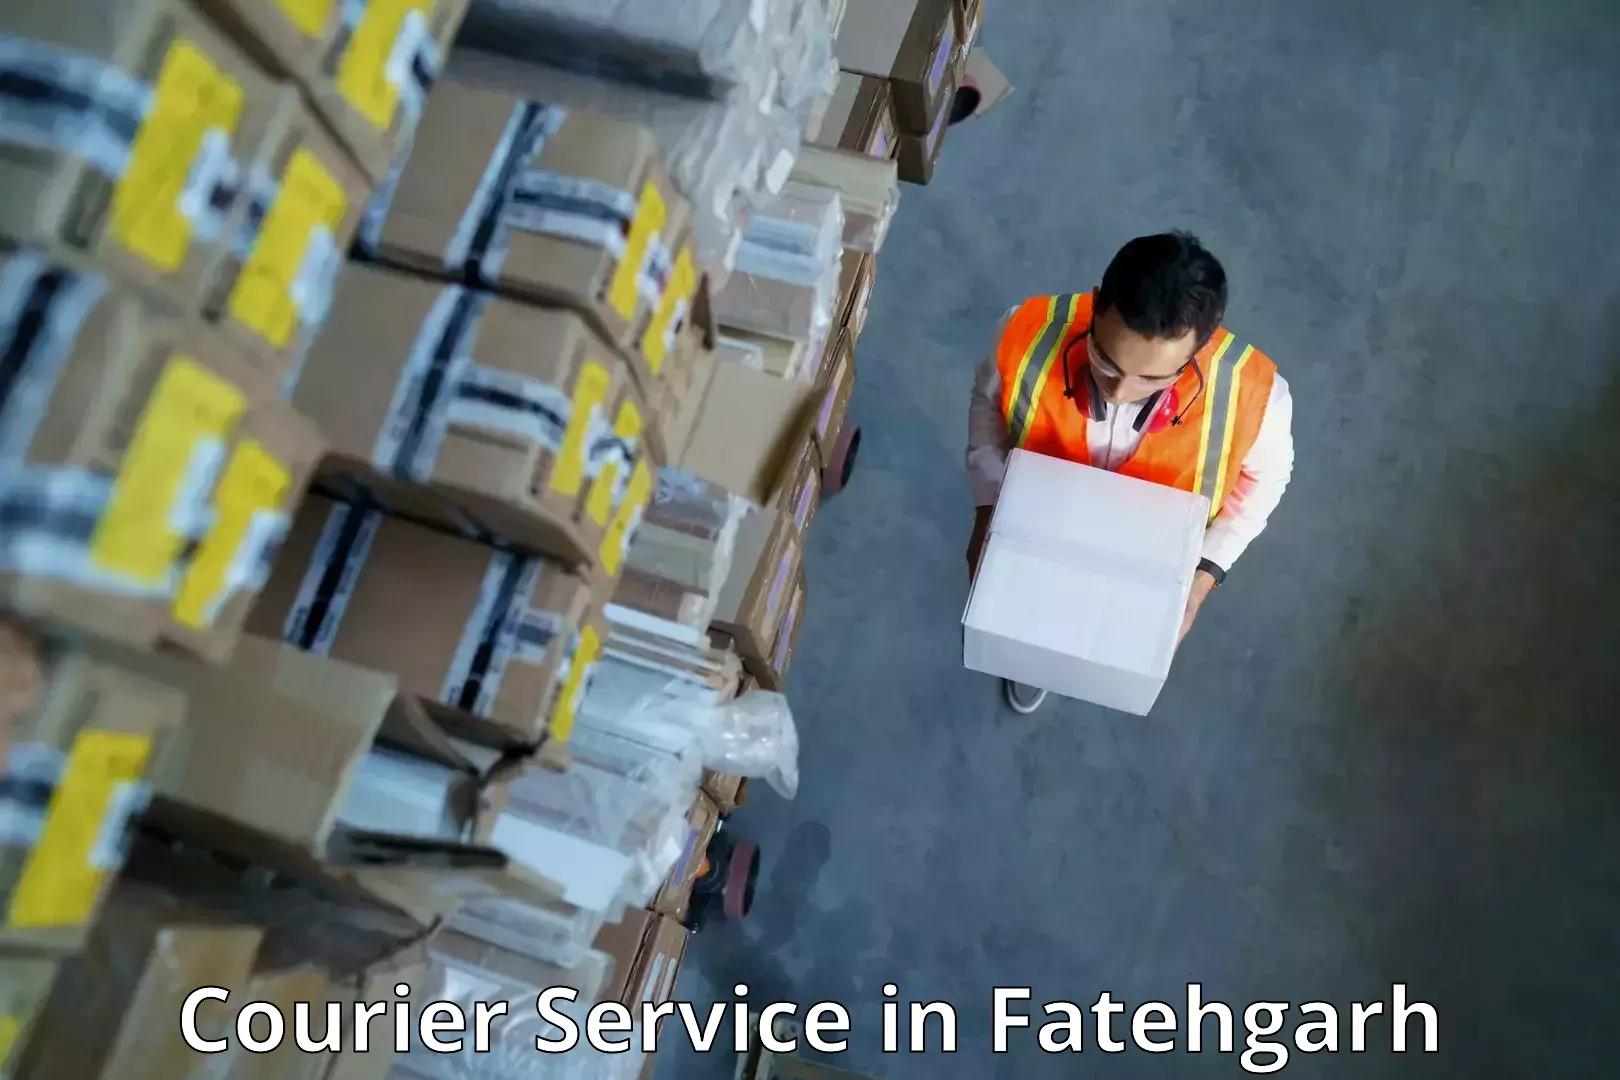 Efficient order fulfillment in Fatehgarh